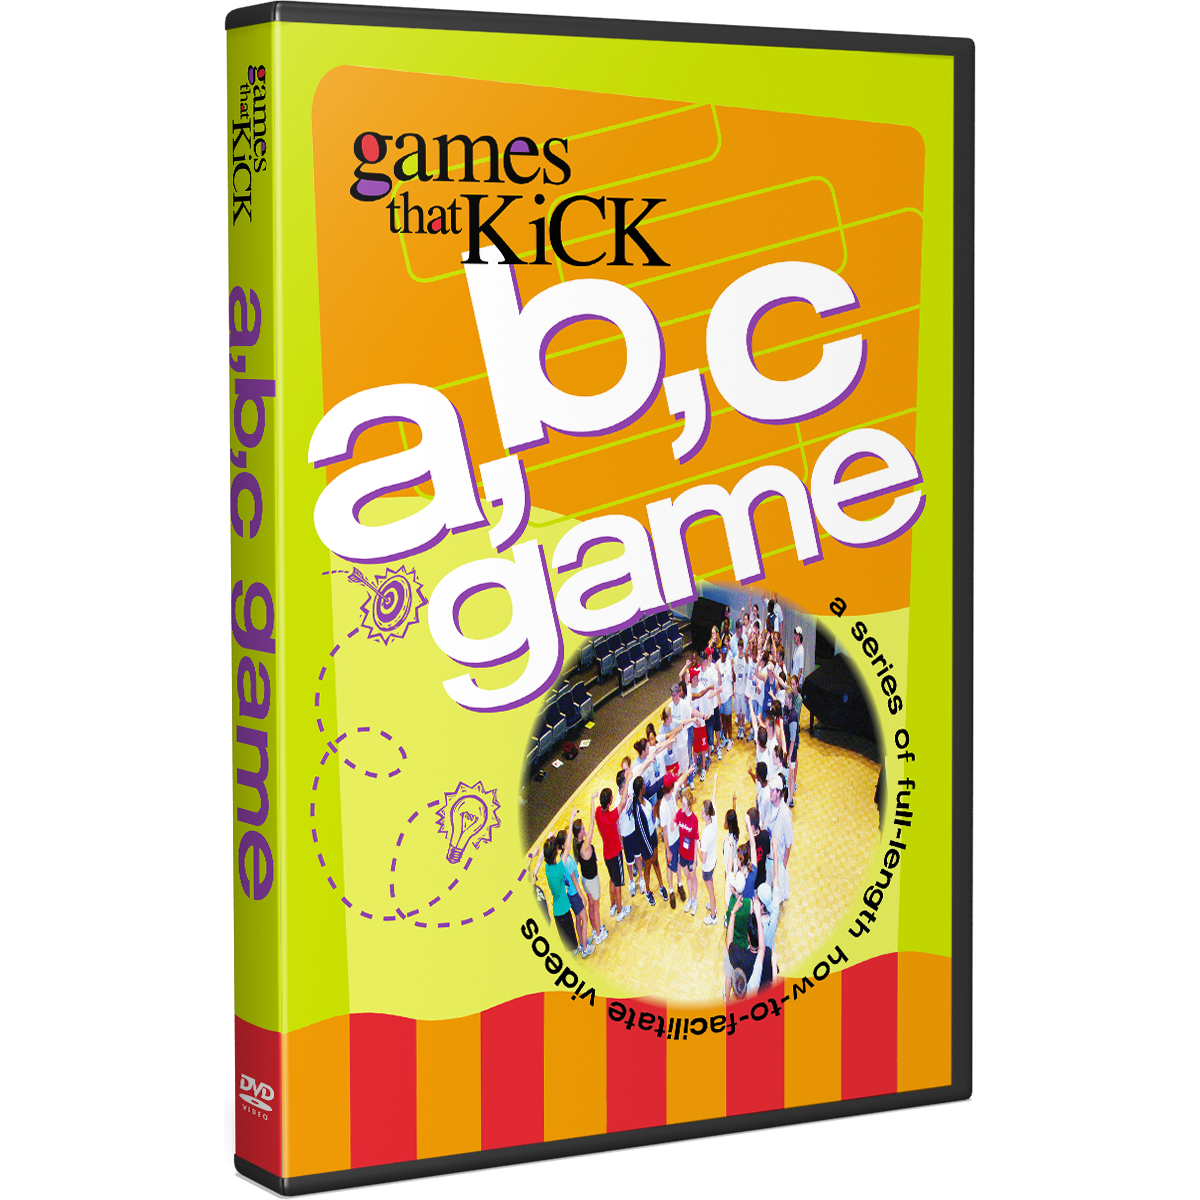 ABC Games